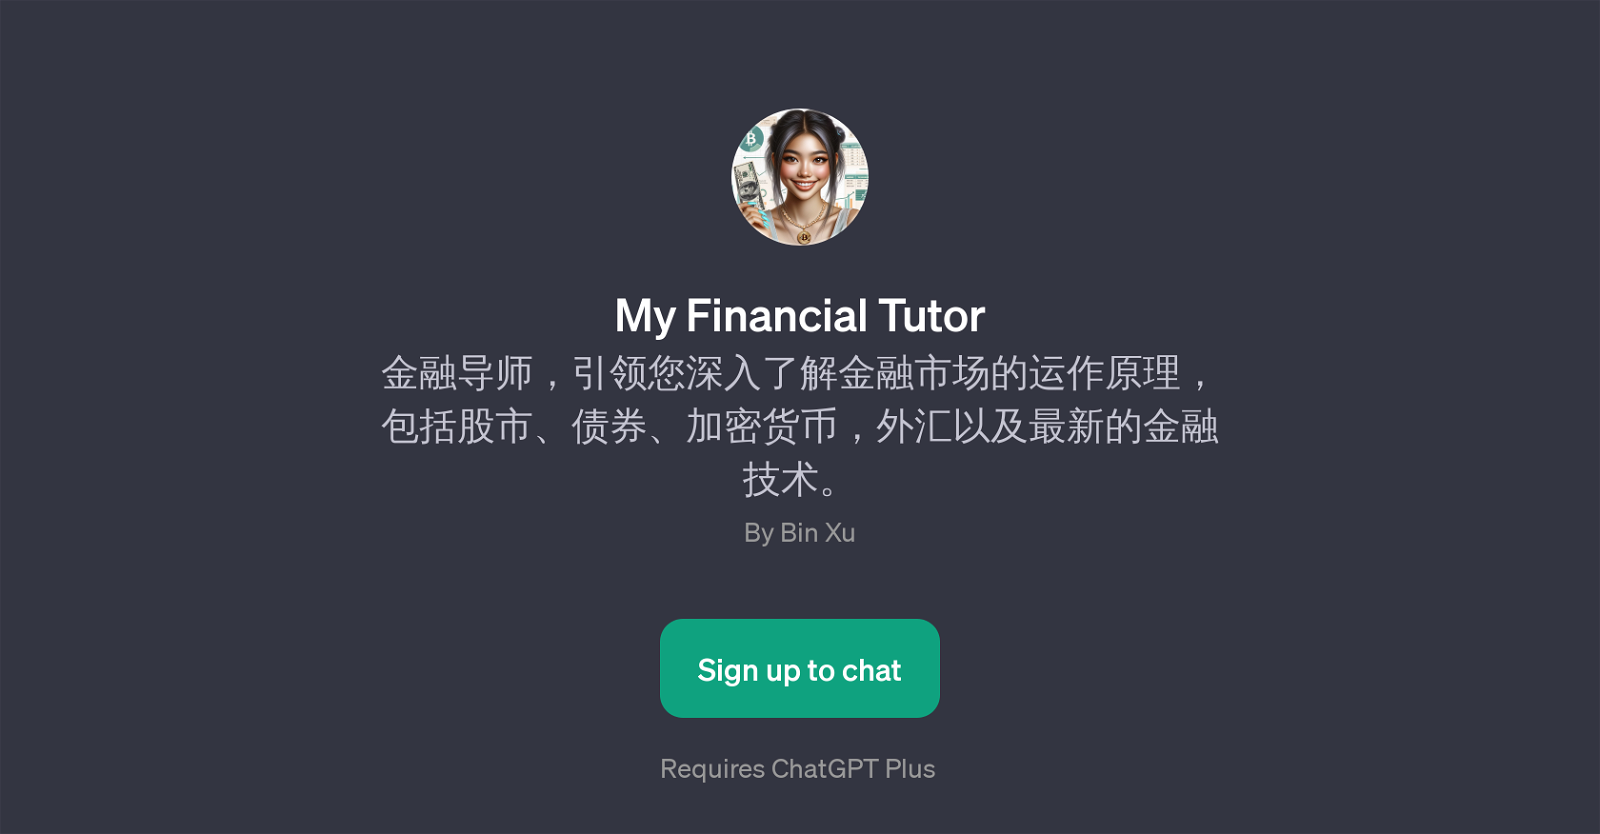 My Financial Tutor website